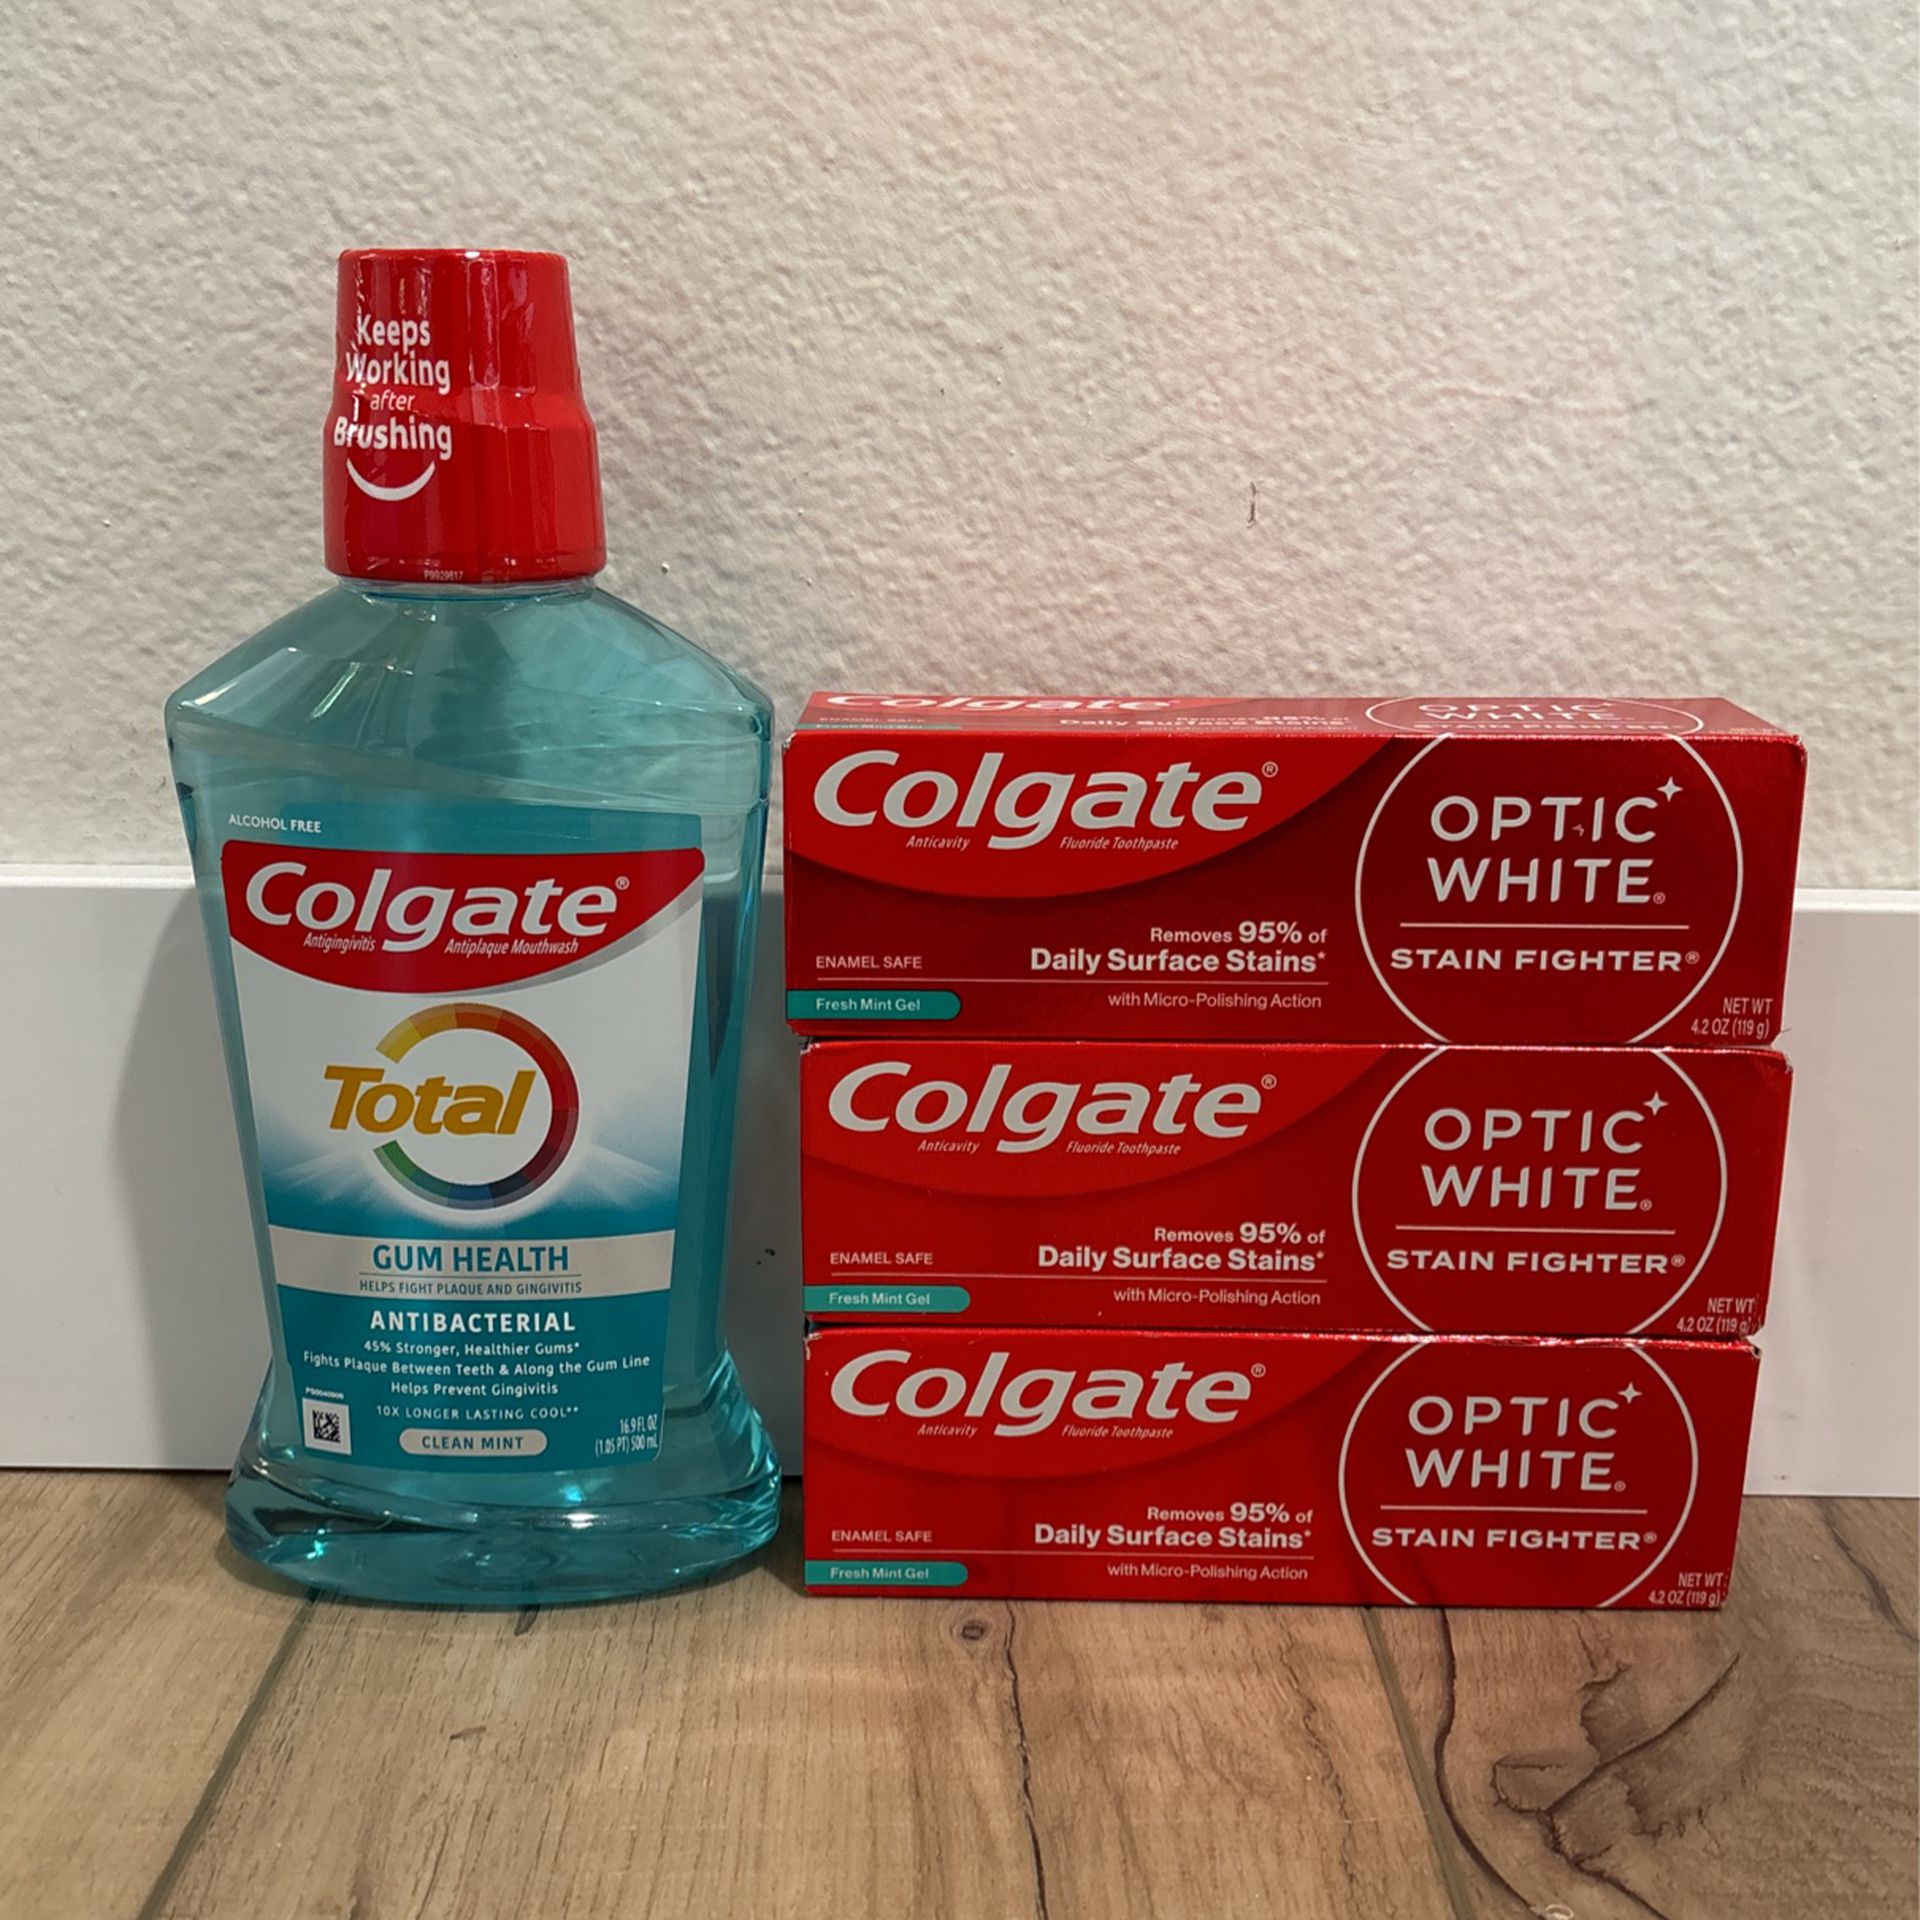 Brand New Colgate Toothpaste & Mouthwash Bundle $8